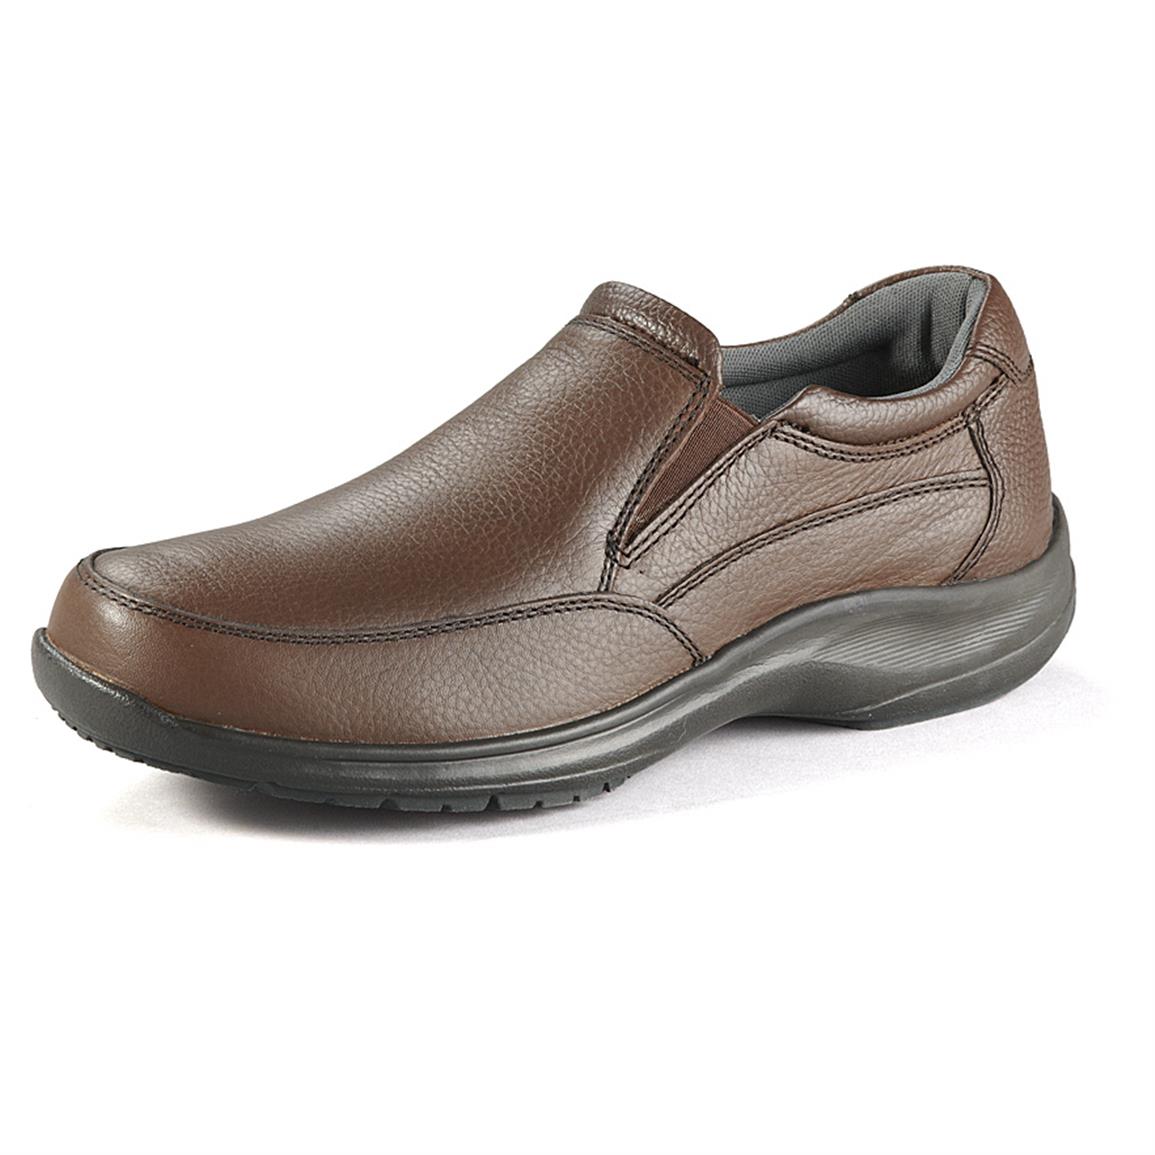 Men's Nunn Bush Strutt Casual Shoes, Brown - 611286, Casual Shoes at ...